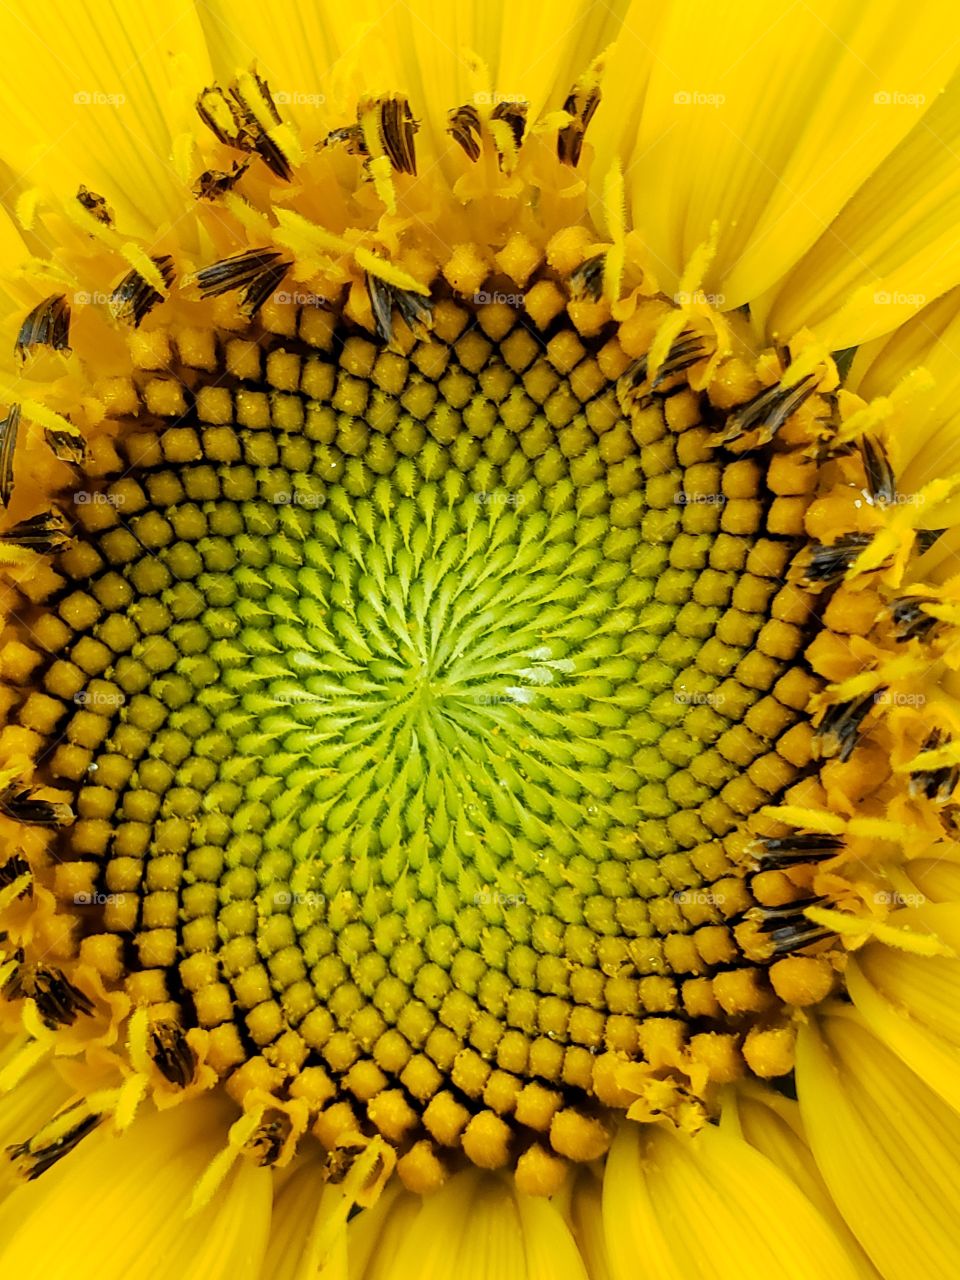 Spiral design on my sunflowers